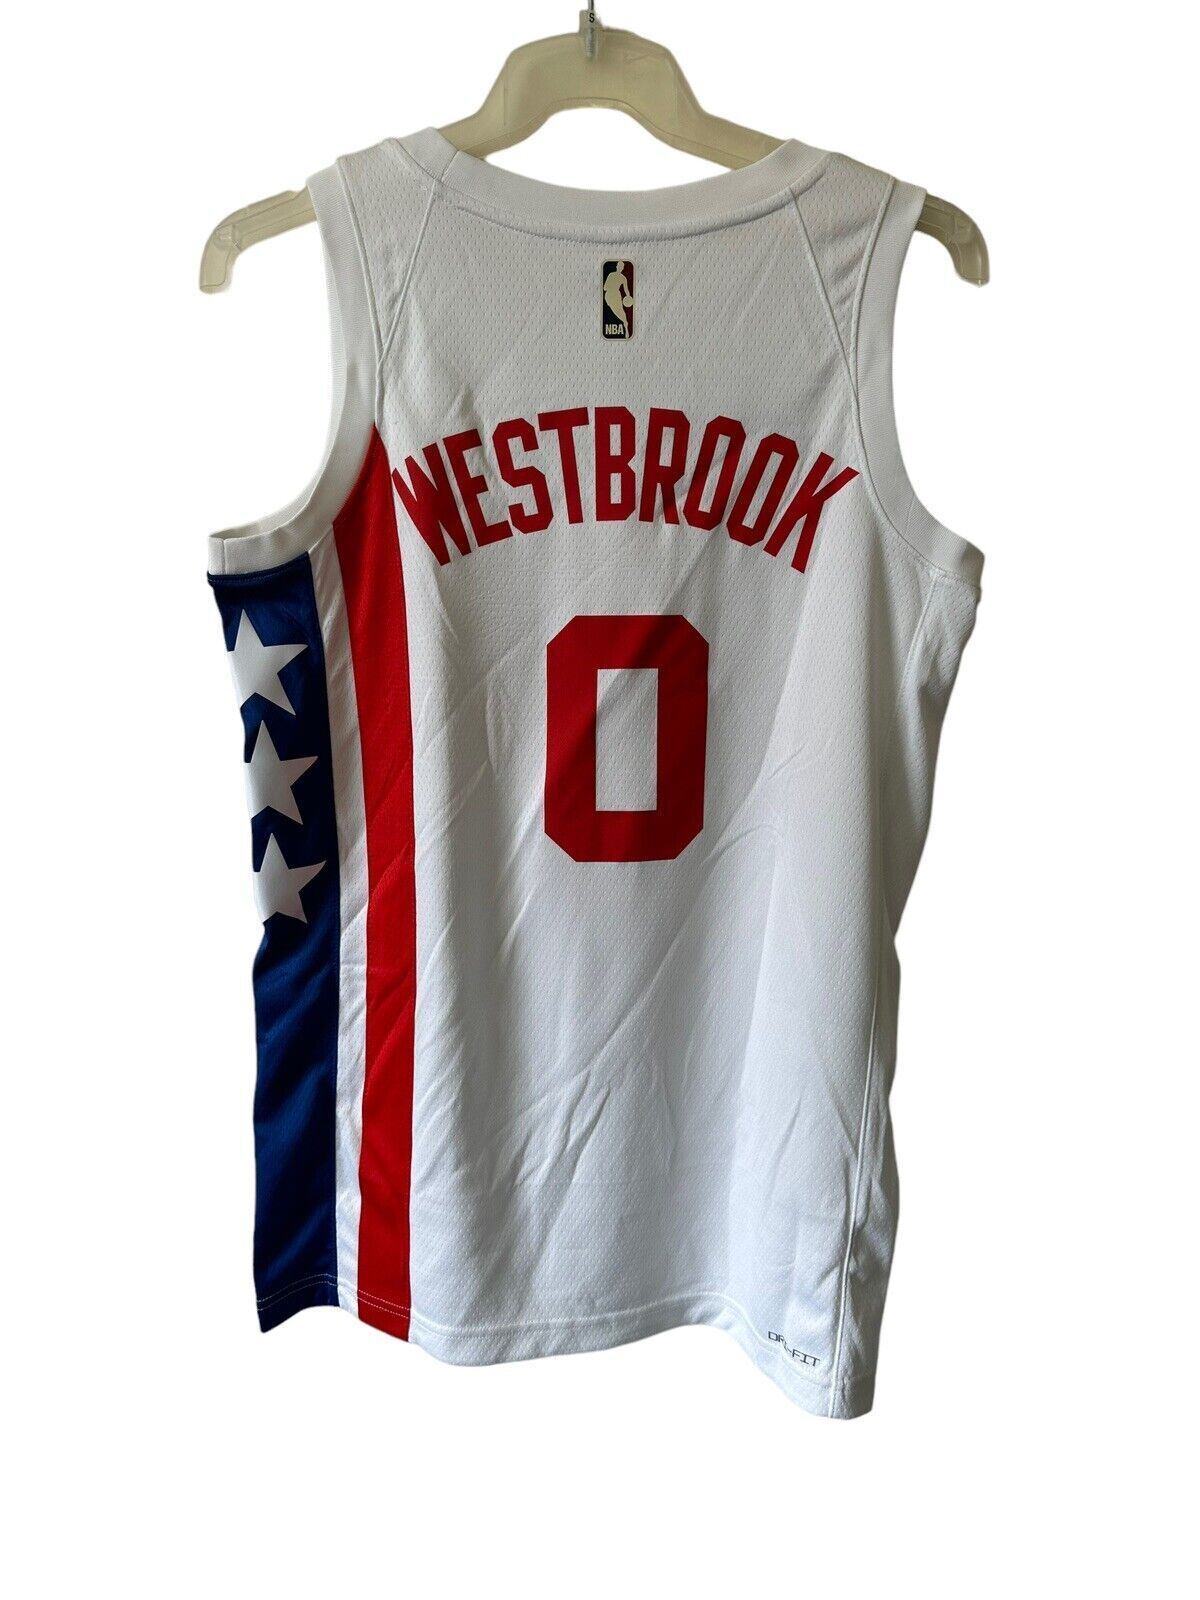 Nike NBA Brooklyn Nets Classic Edition Jersey WESTBROOK 0 Basketball Mens Small